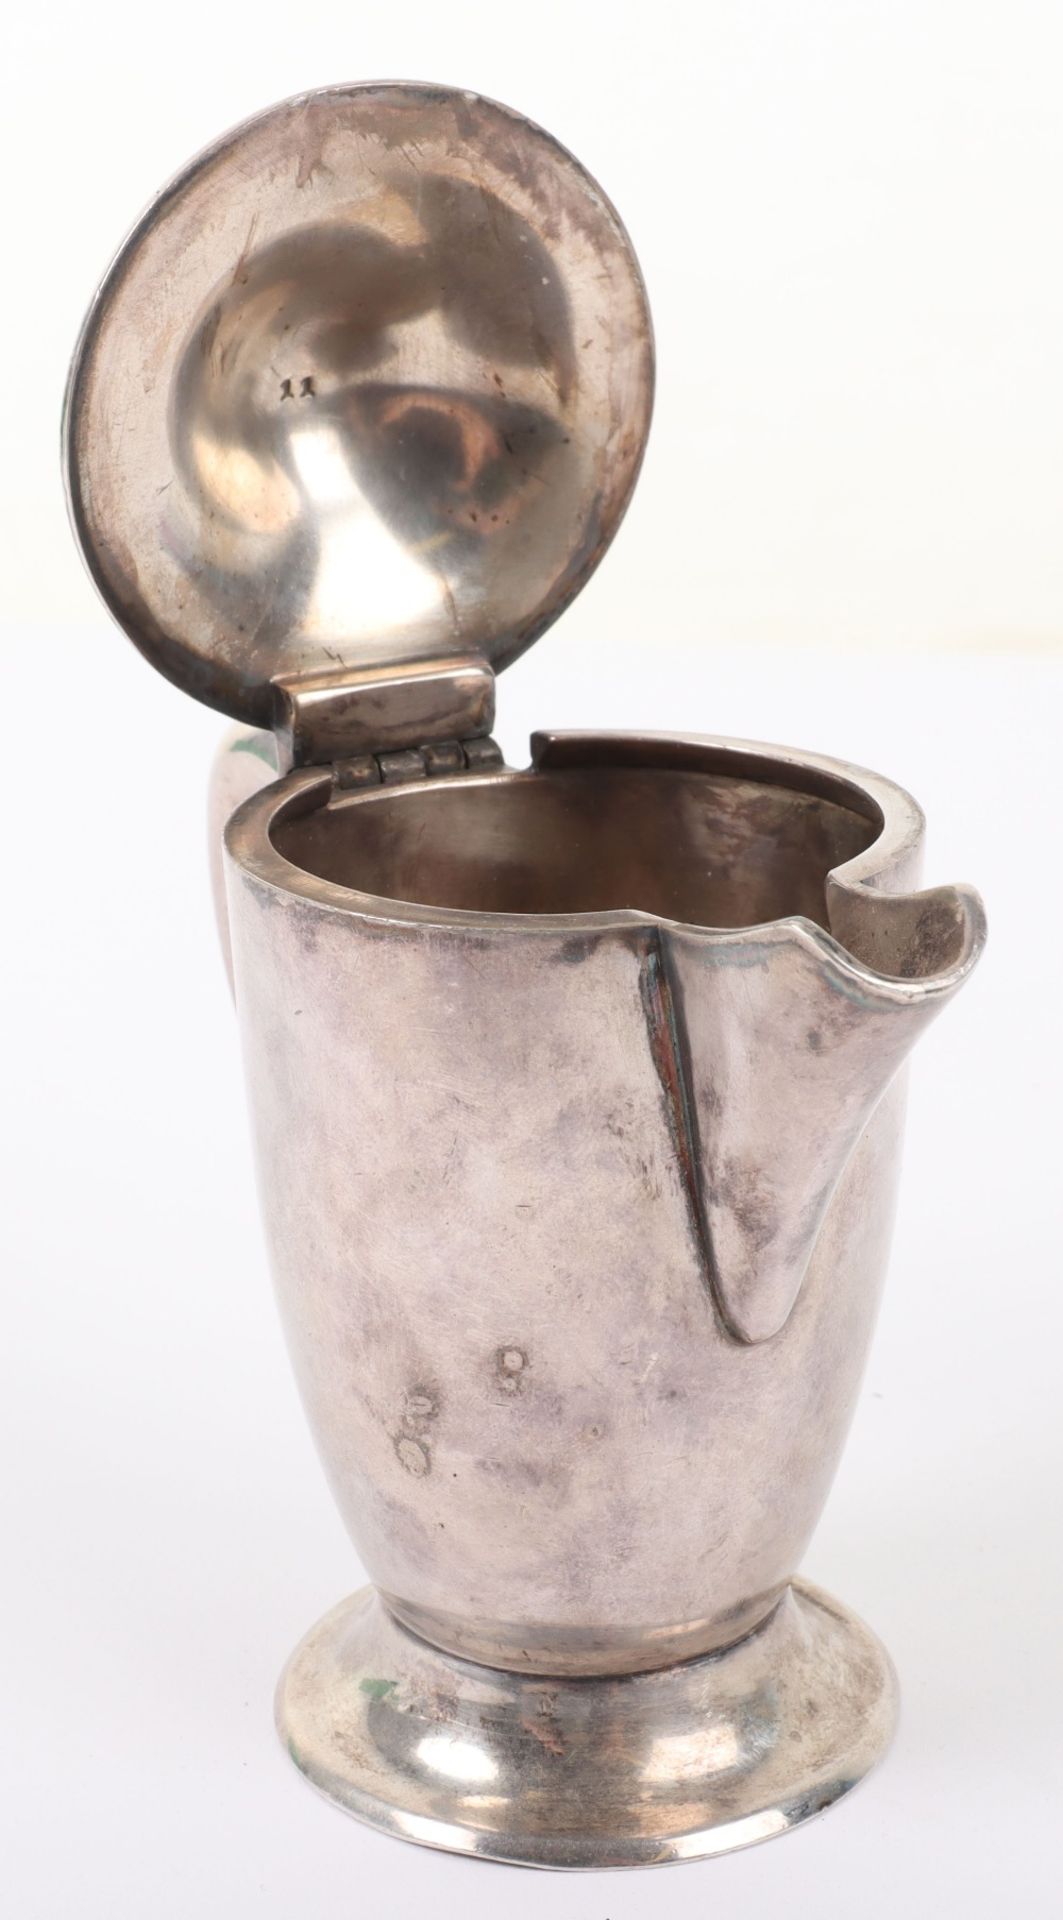 Third Reich Der Deutsche Hof Hotel Formal Tableware Silver Plated Single Cup Coffee Pot - Image 7 of 8